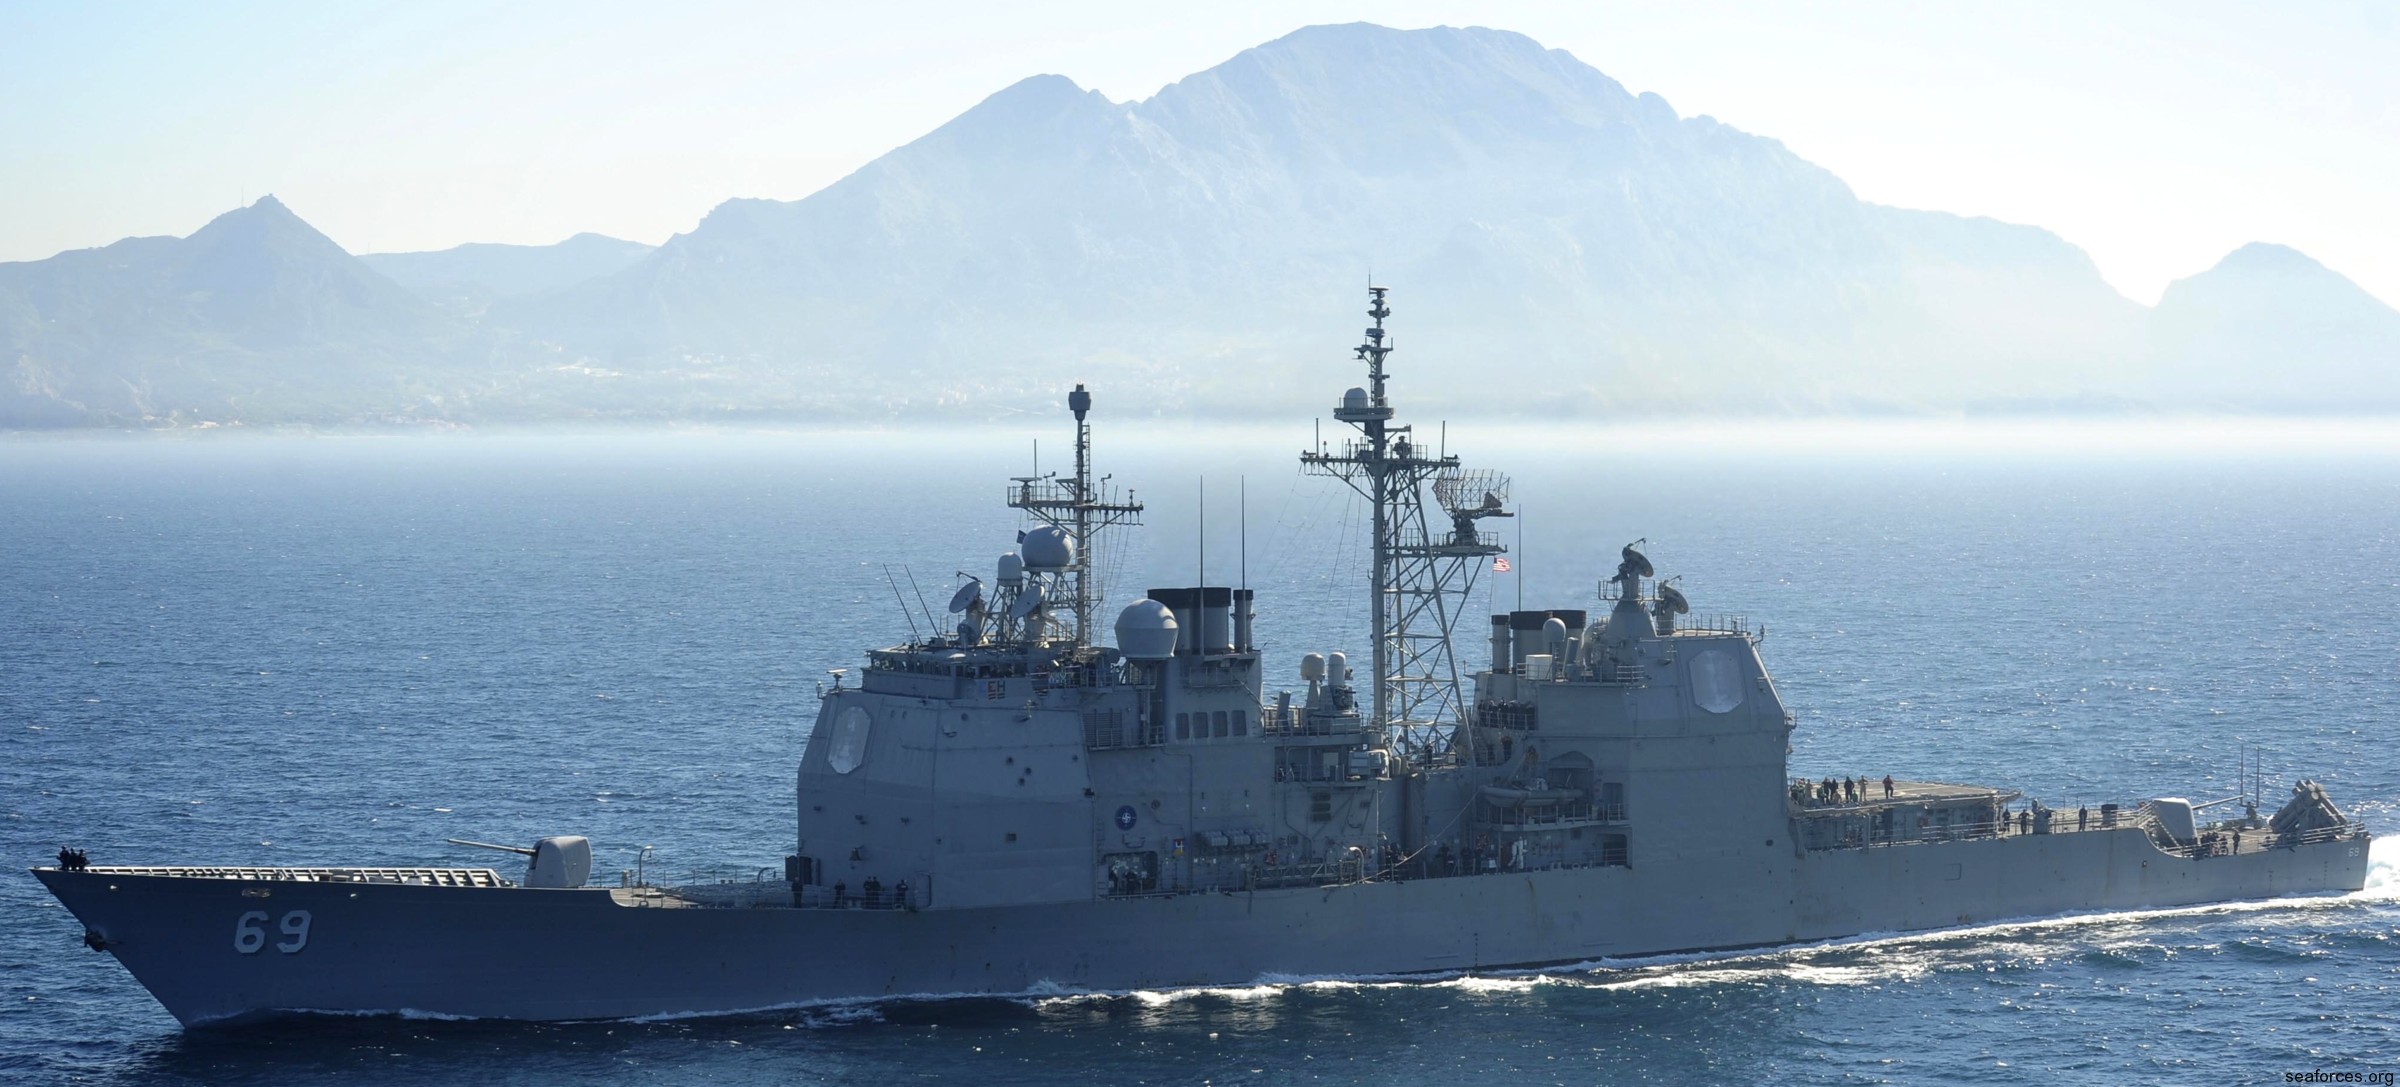 cg-69 uss vicksburg ticonderoga class guided missile cruiser us navy 08 gibraltar